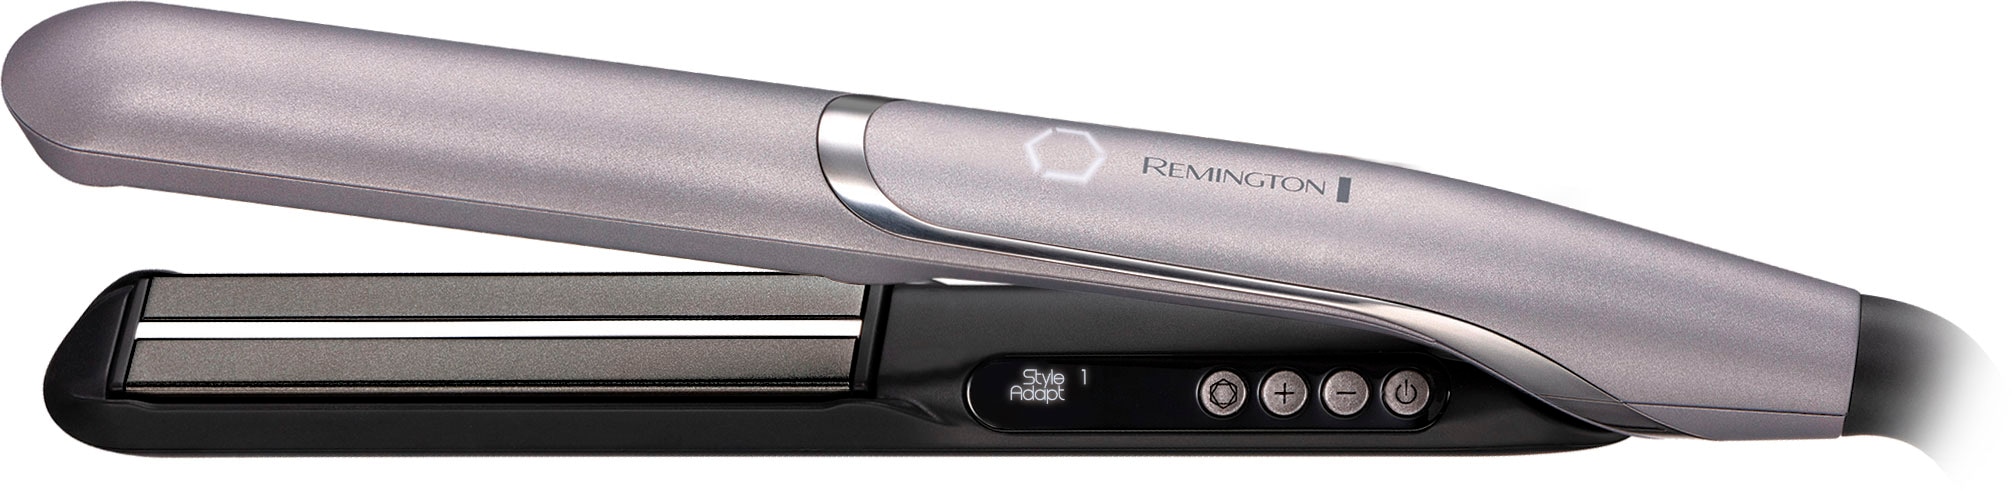 2 OTTO S9880«, Glätteisen Haarglätter, jetzt Keramik-Beschichtung, Memory bei kaufen »PROluxe Funktion, lernfähiger You™ Remington Nutzerprofile StyleAdapt™